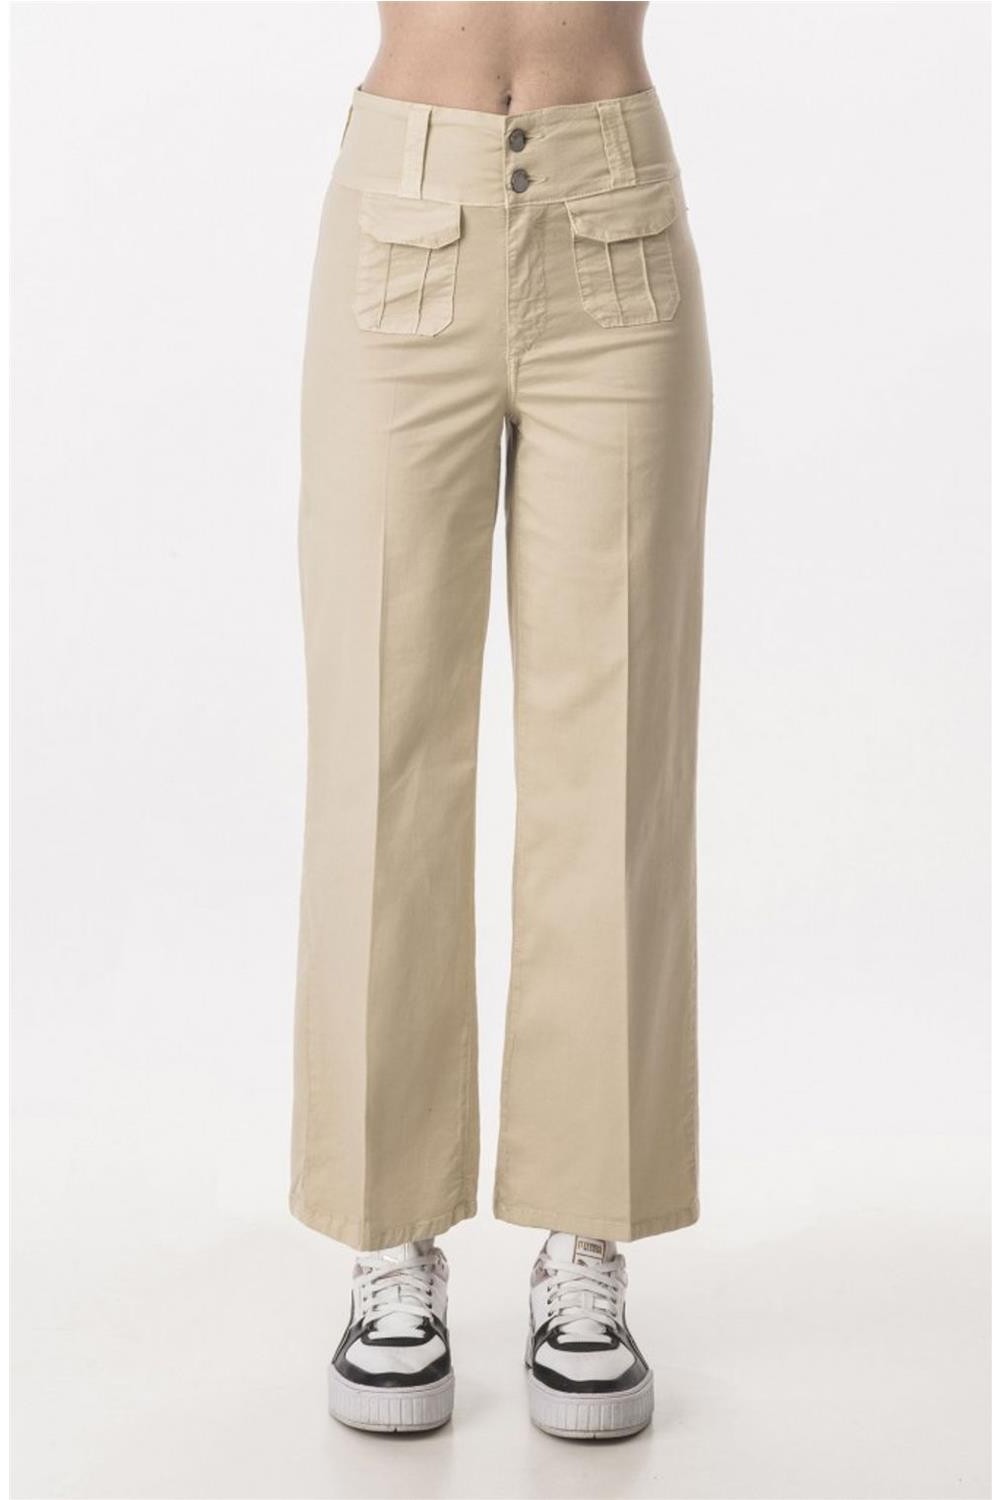 pantalon-loneta-de-mujer-p1544s-sos-jeans-blanco-leche-arena-o-negro-cinturilla-doble-4717p1544s